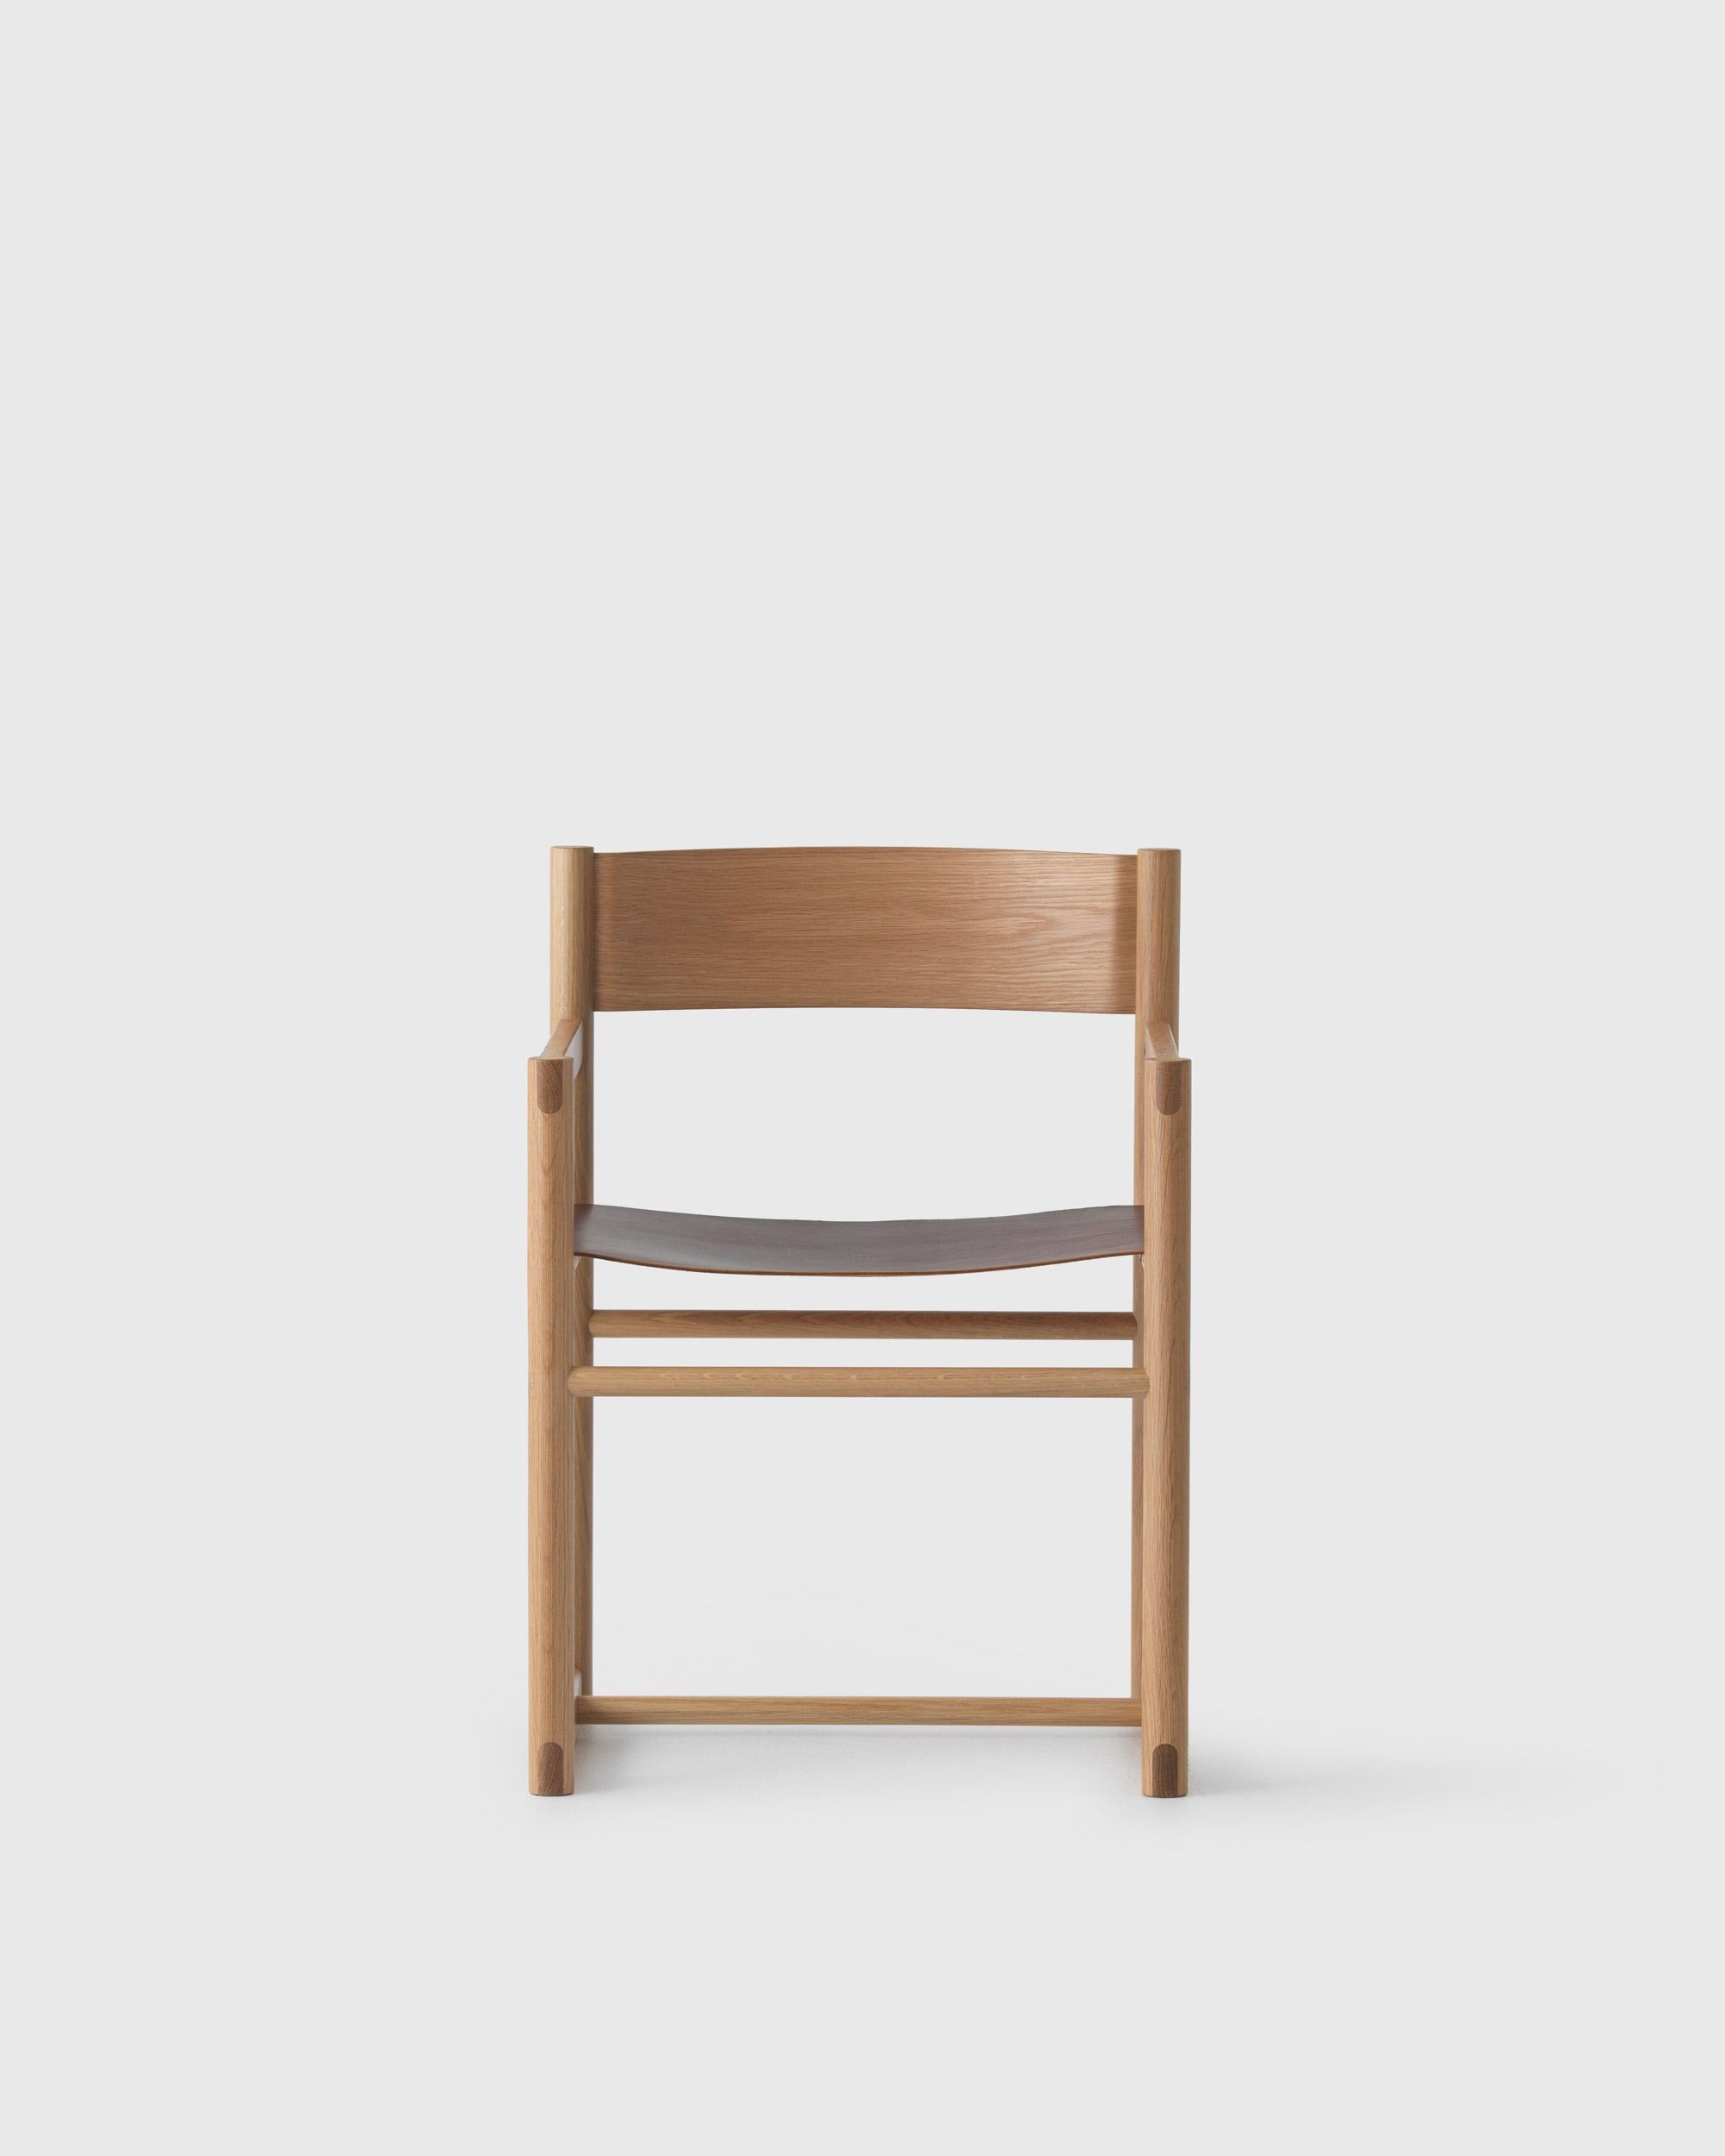 Minimalist Passenger Chair designed by Simon James